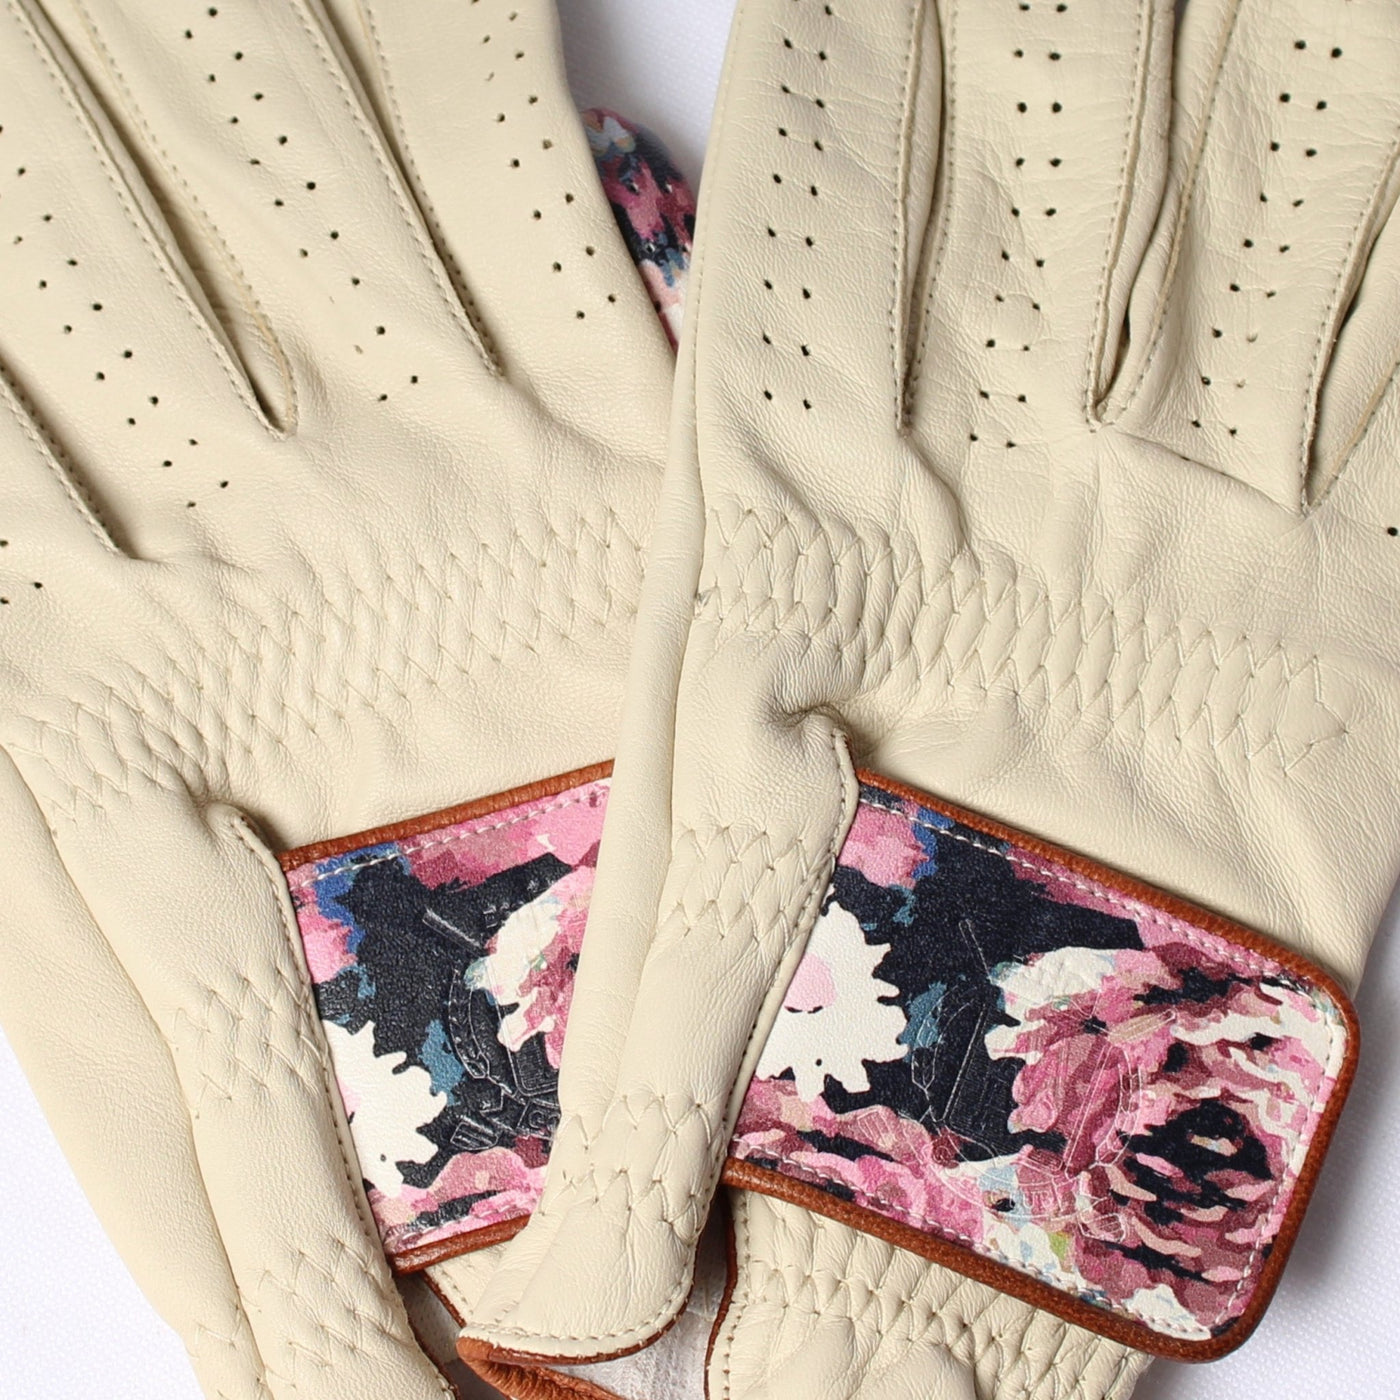 PRO Floral Cabretta Leather Golf Gloves (2 Pack) - MODEST VINTAGE PLAYER LTD